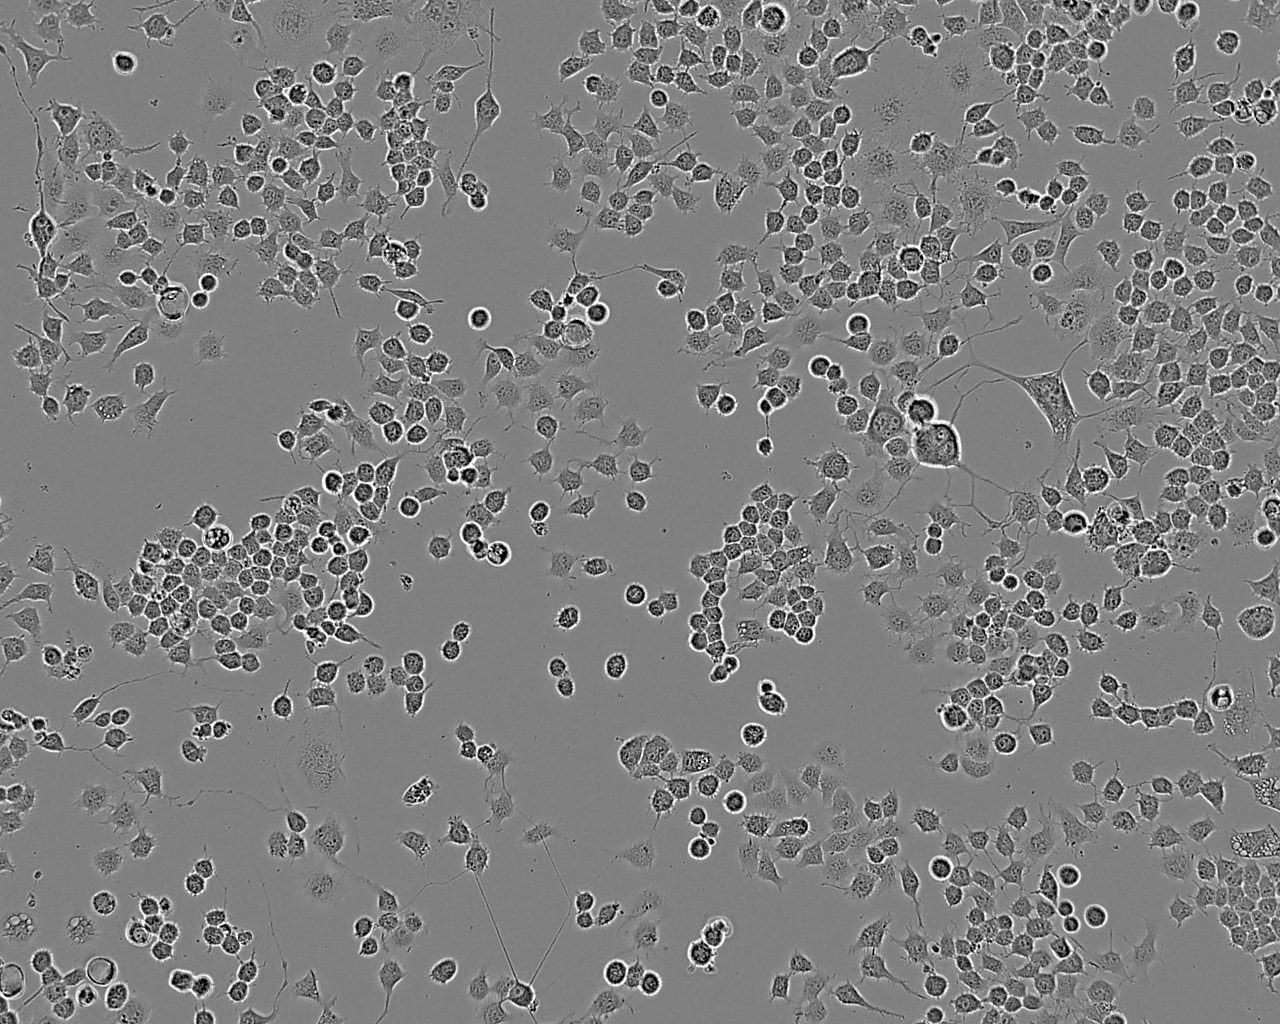 NCI-H441 Cells|人肺腺癌细胞系